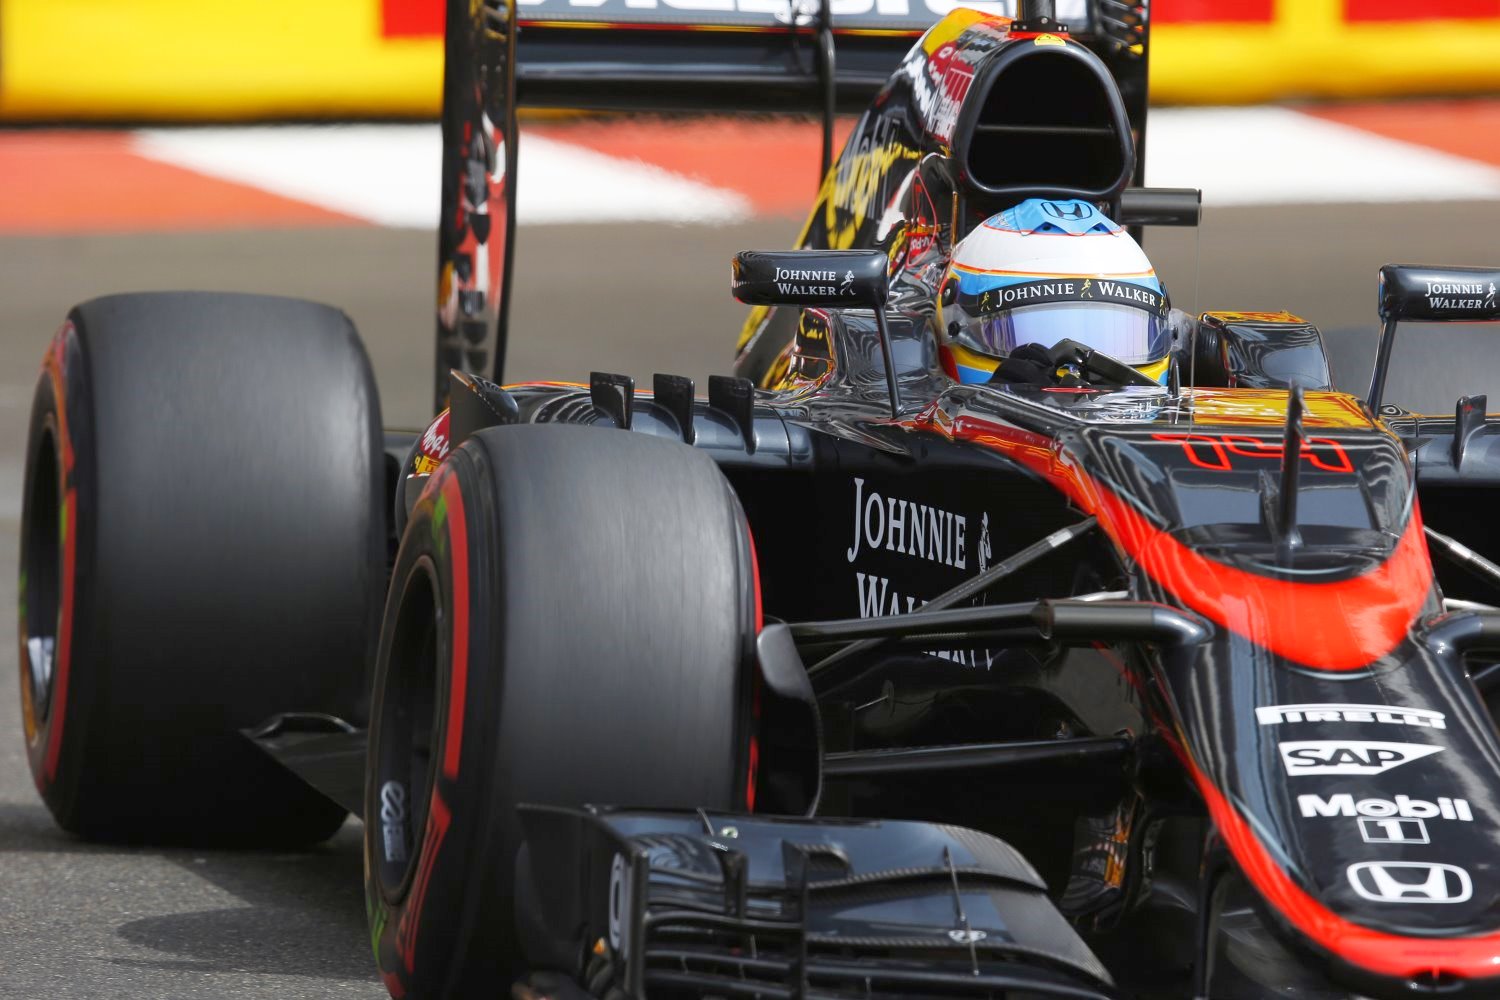 McLaren Honda have big upgrades planned